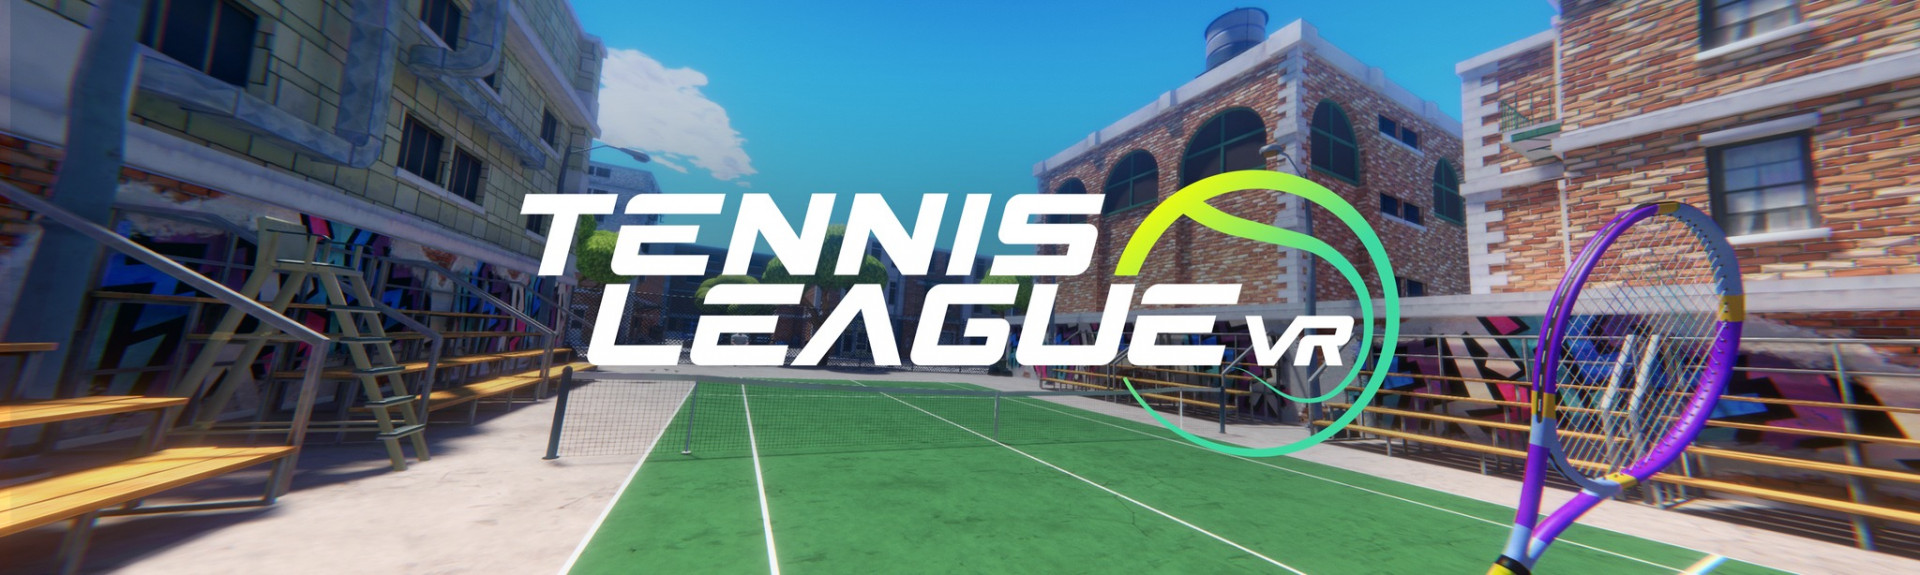 Tennis League VR - Early access demo